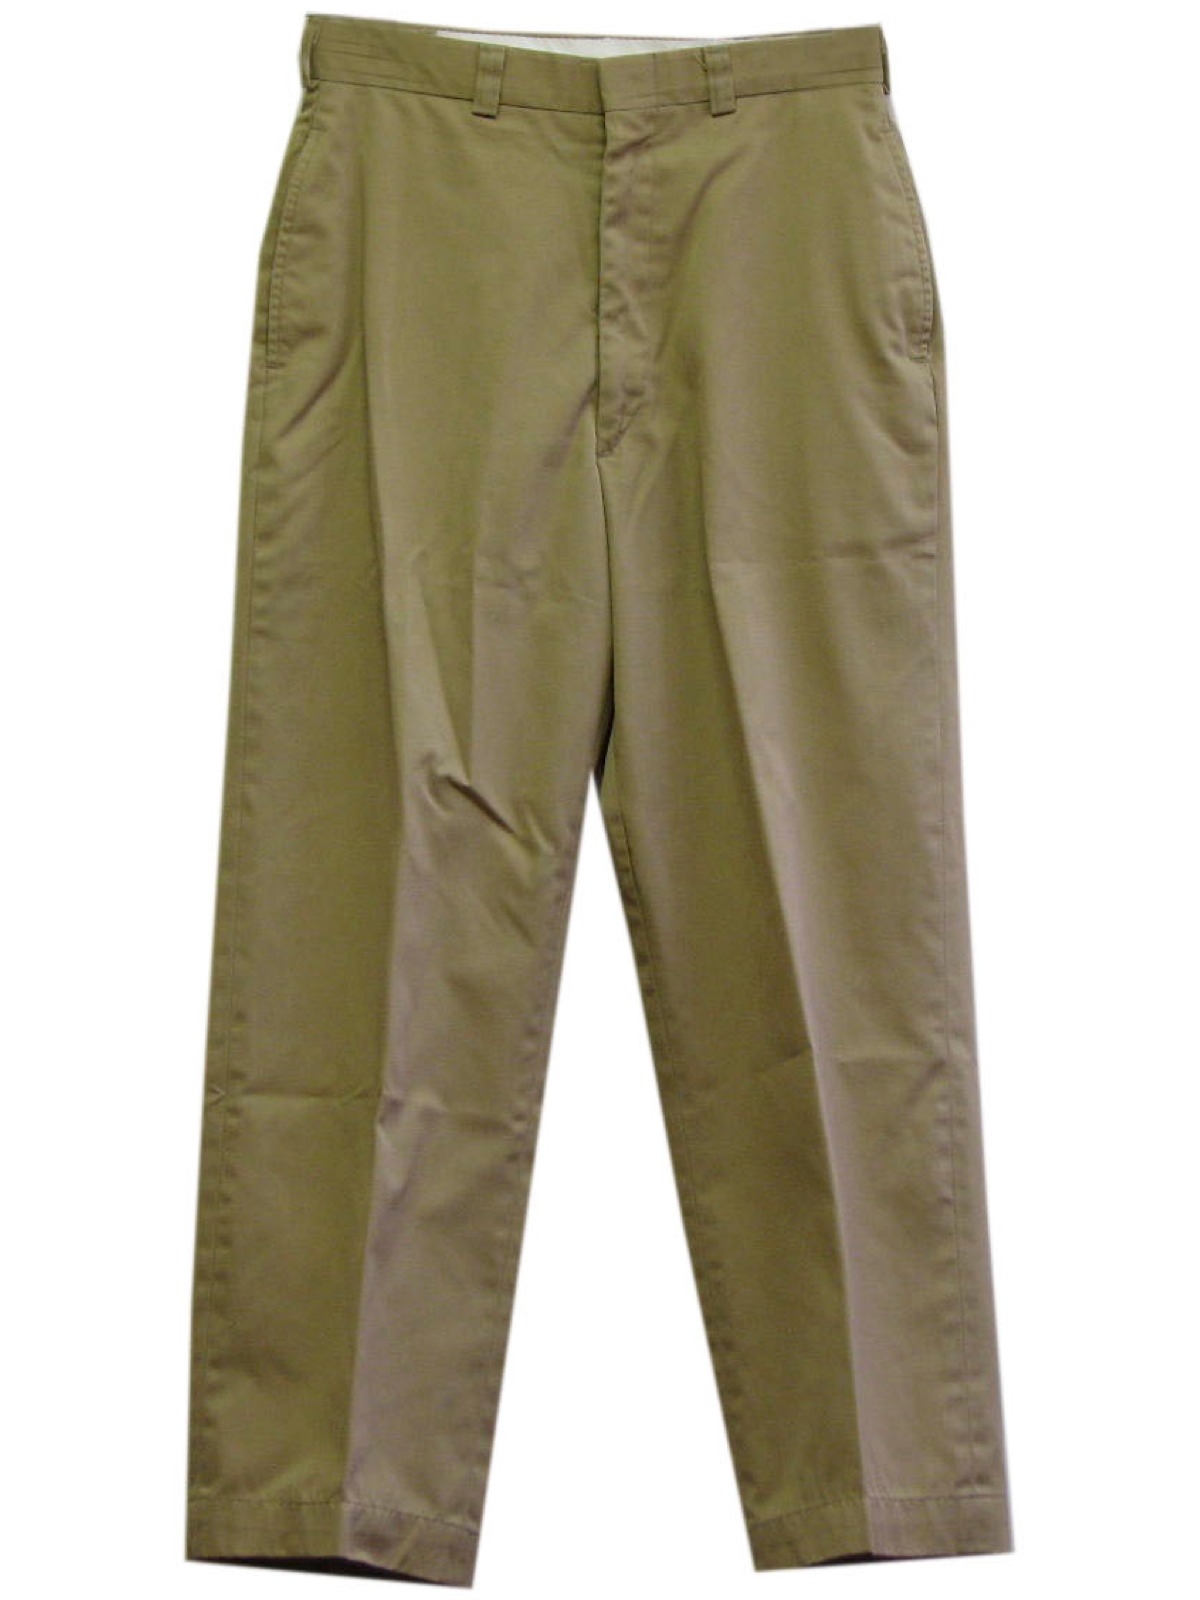 60s Retro Pants: Early 60s -No Label- Mens khaki tan cotton polyester ...